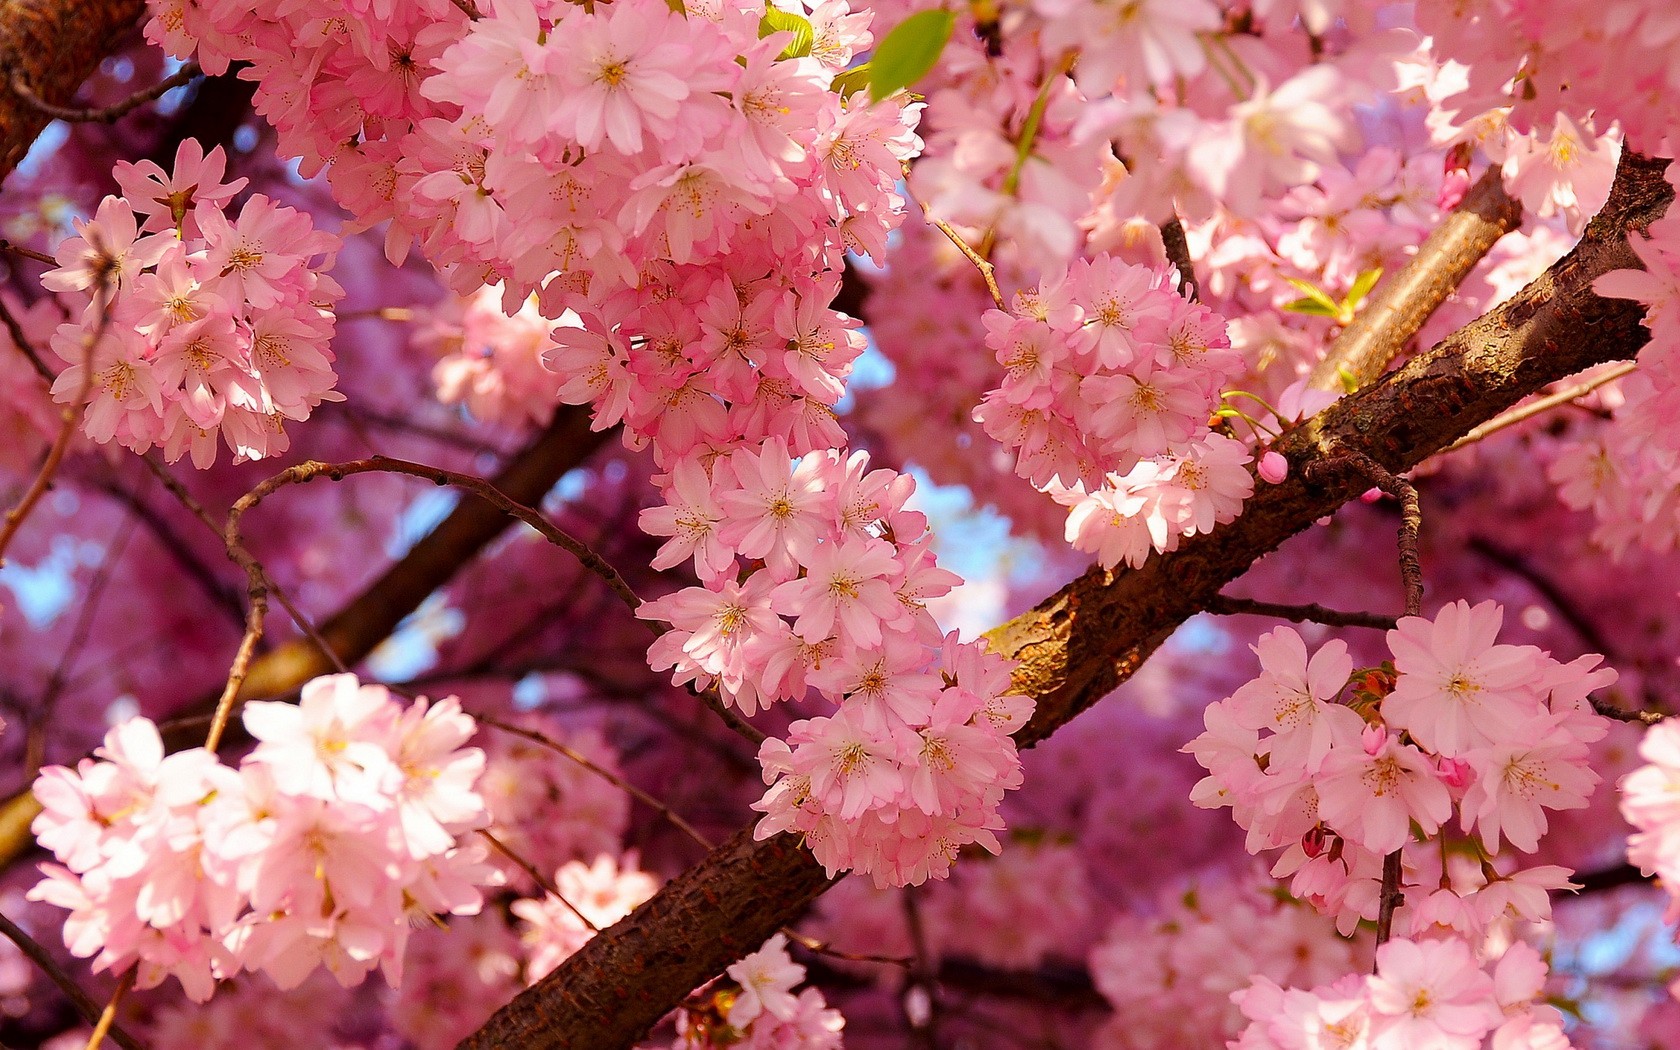 Wallpapers, Botanic,flowers, Nature, Desktop Backgrounds - Washington Dc Cherry Blossom Peak 2019 - HD Wallpaper 